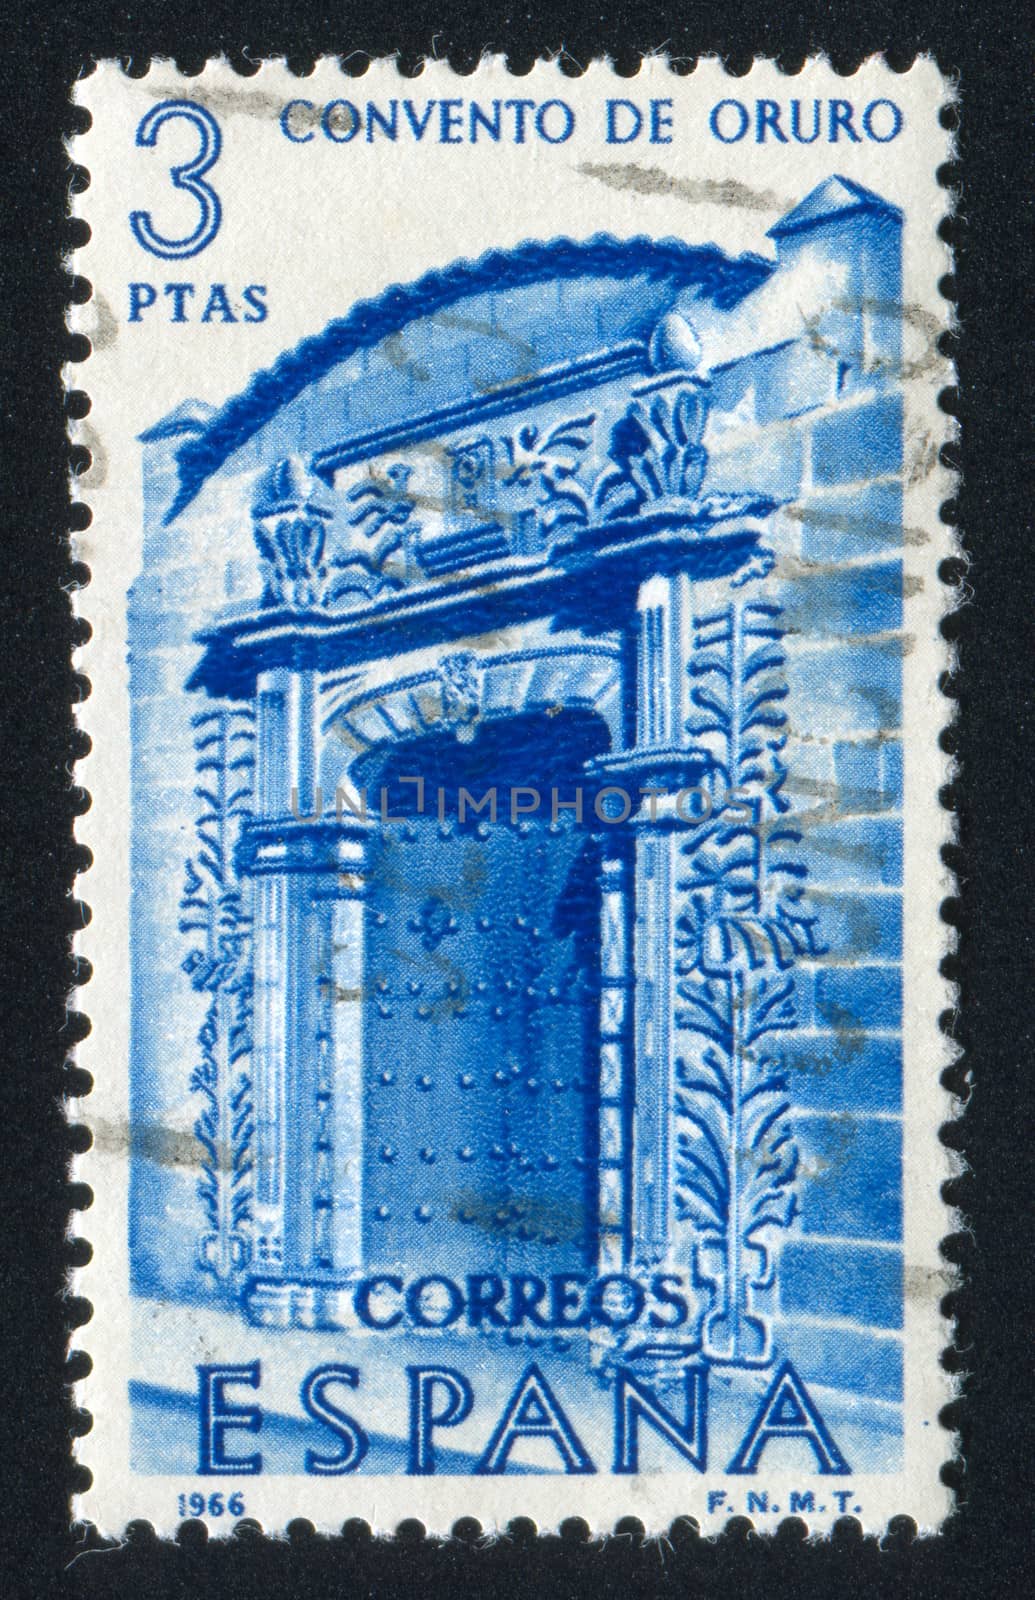 SPAIN - CIRCA 1966: stamp printed by Spain, shows Portal of Oruro Convent, Bolivia, circa 1966